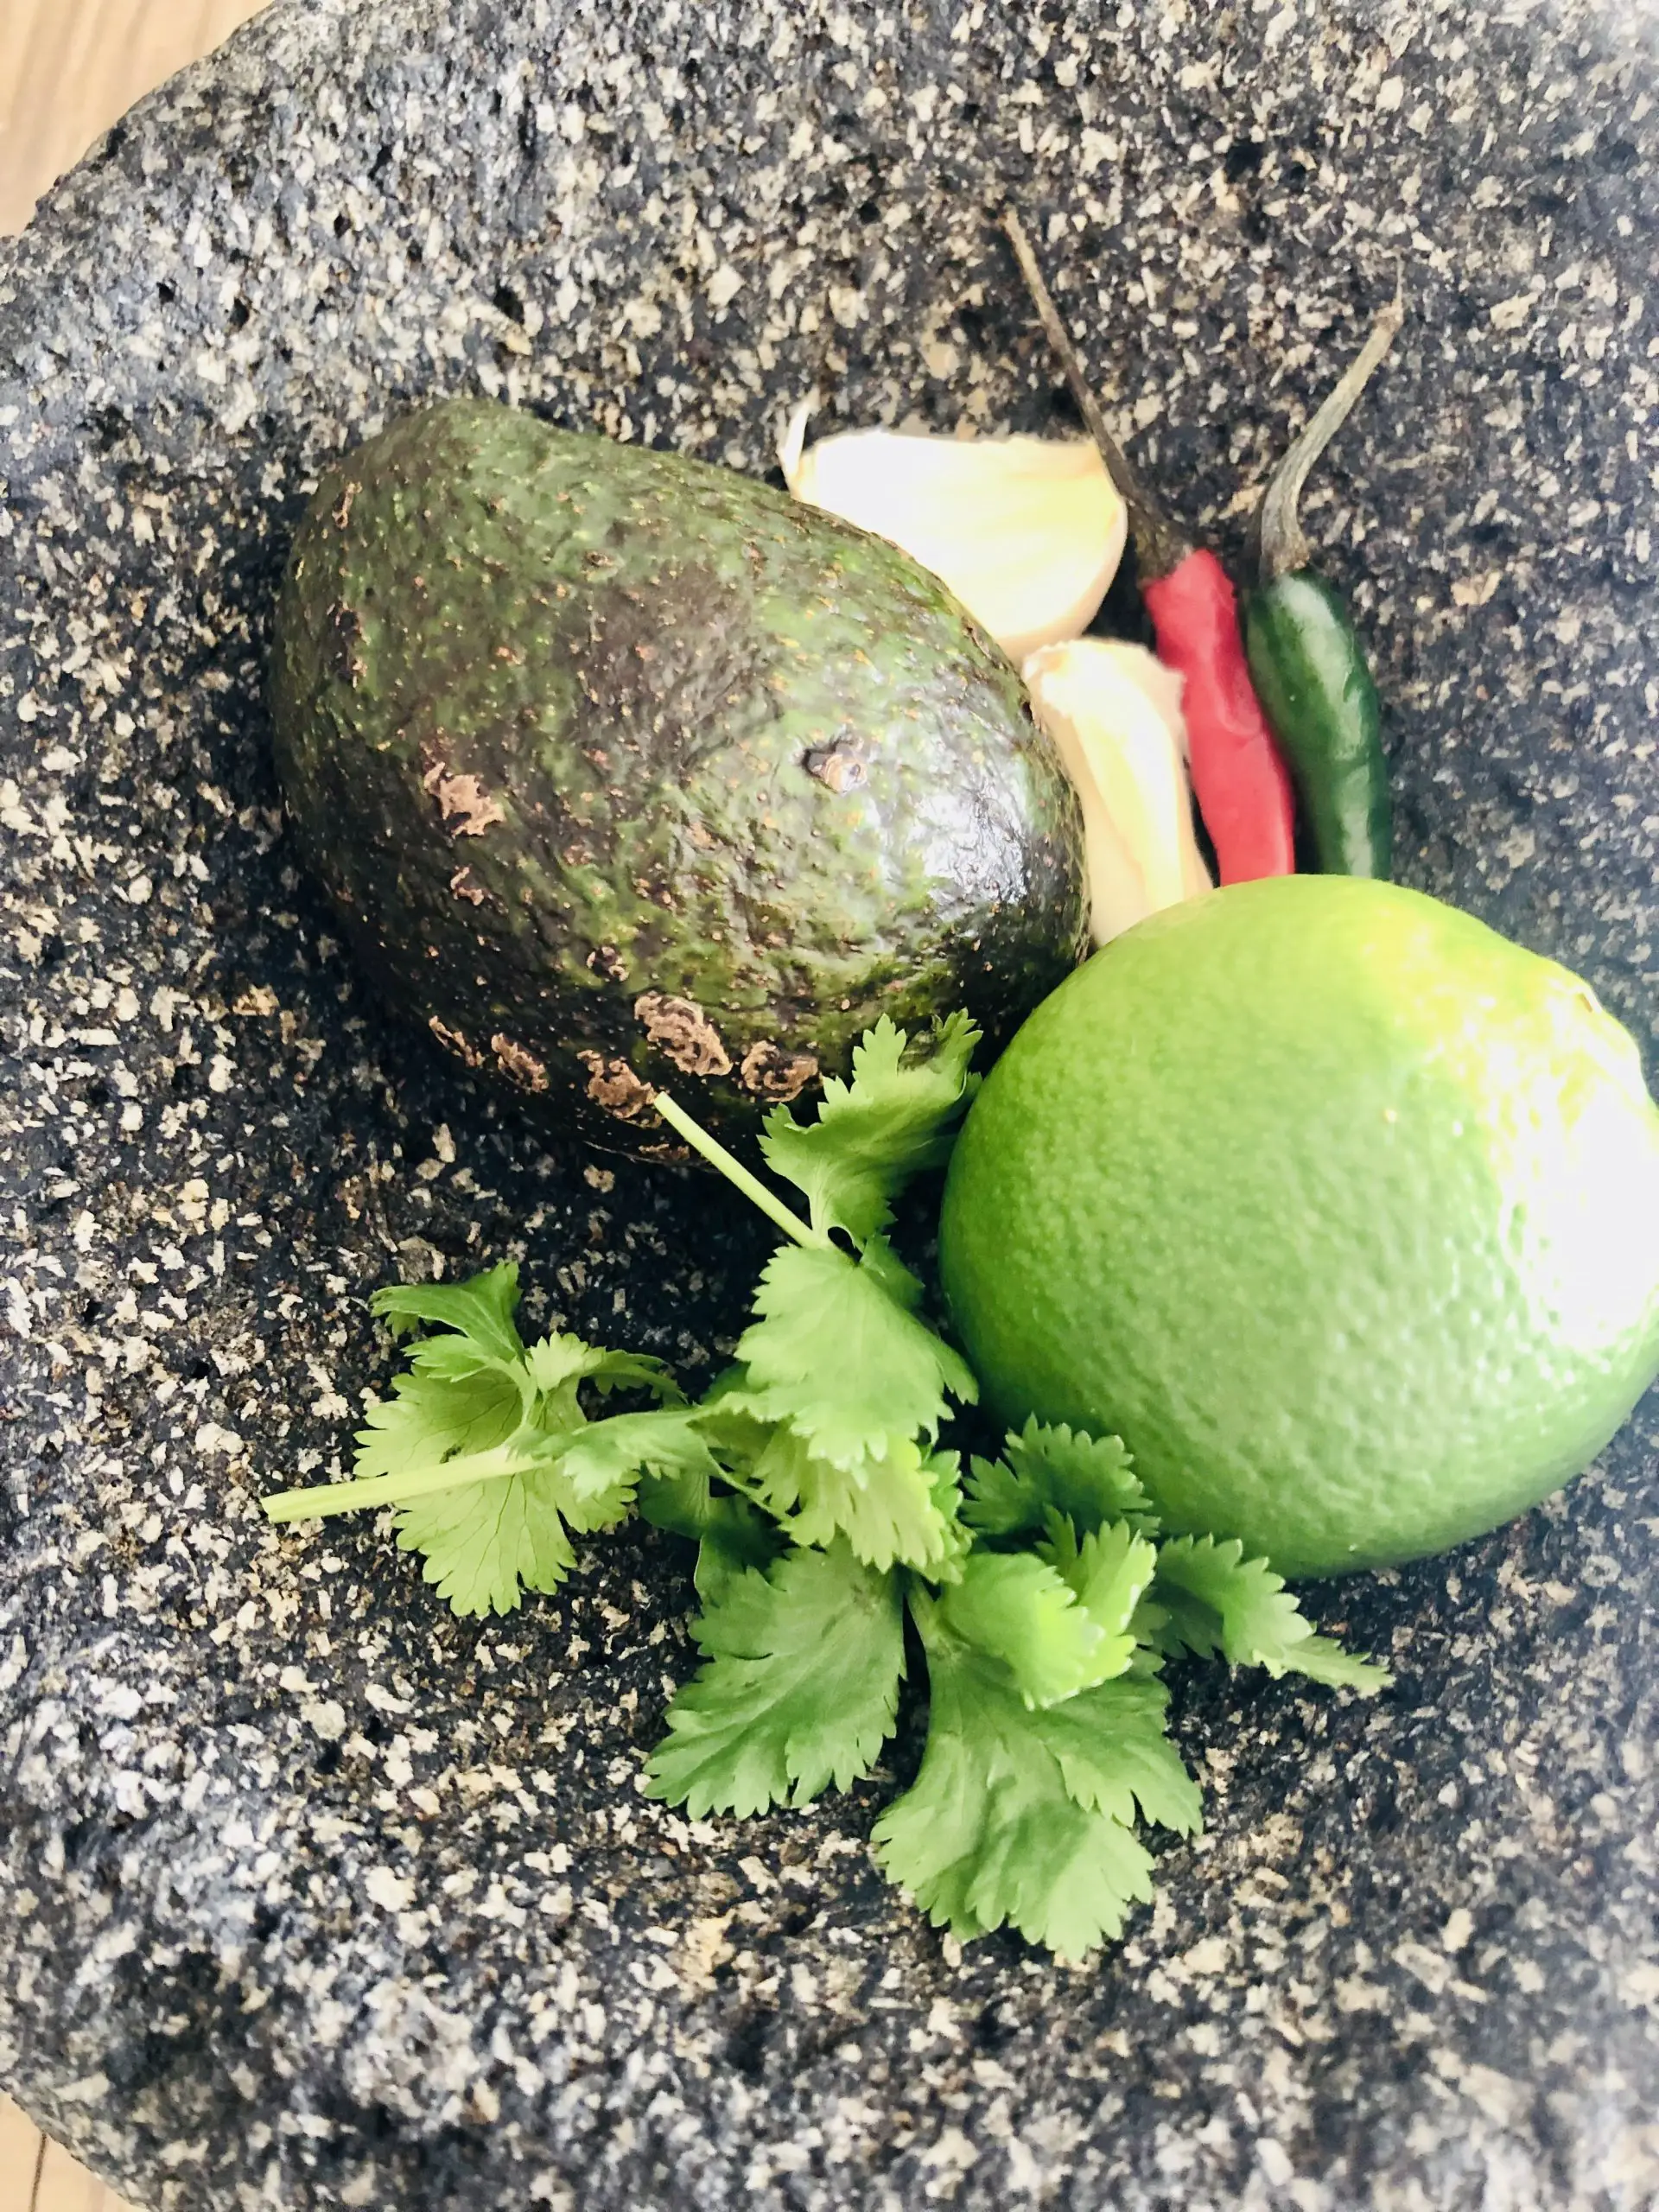 Molcajete containing an avocado, cilantro, lime, garlic, and Thai chilies